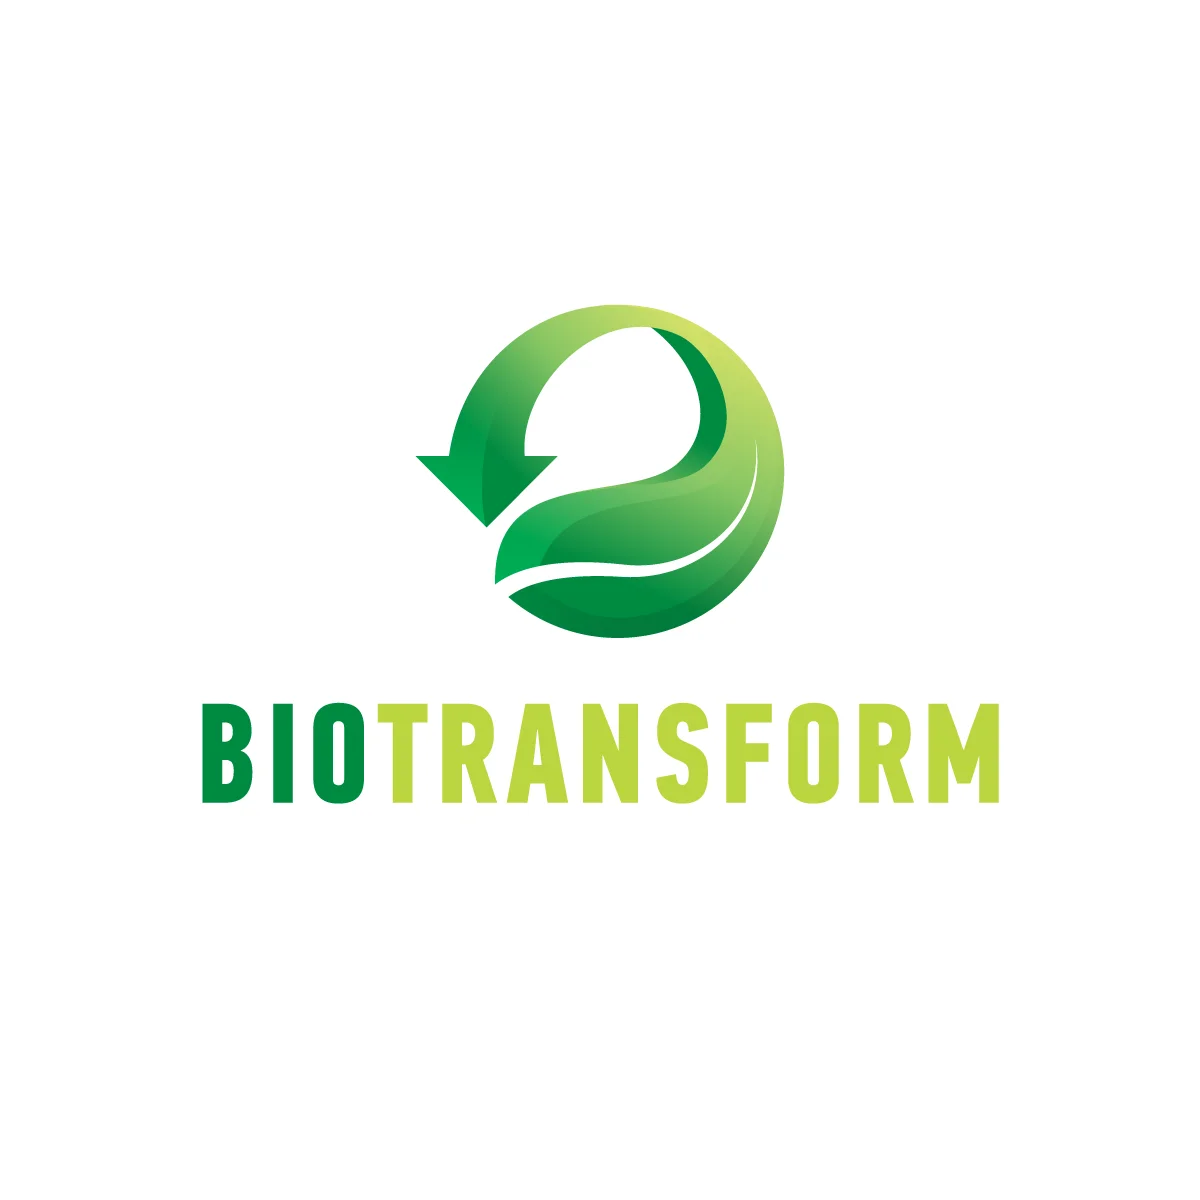 Logo of the project "BIOTRANSFORM"